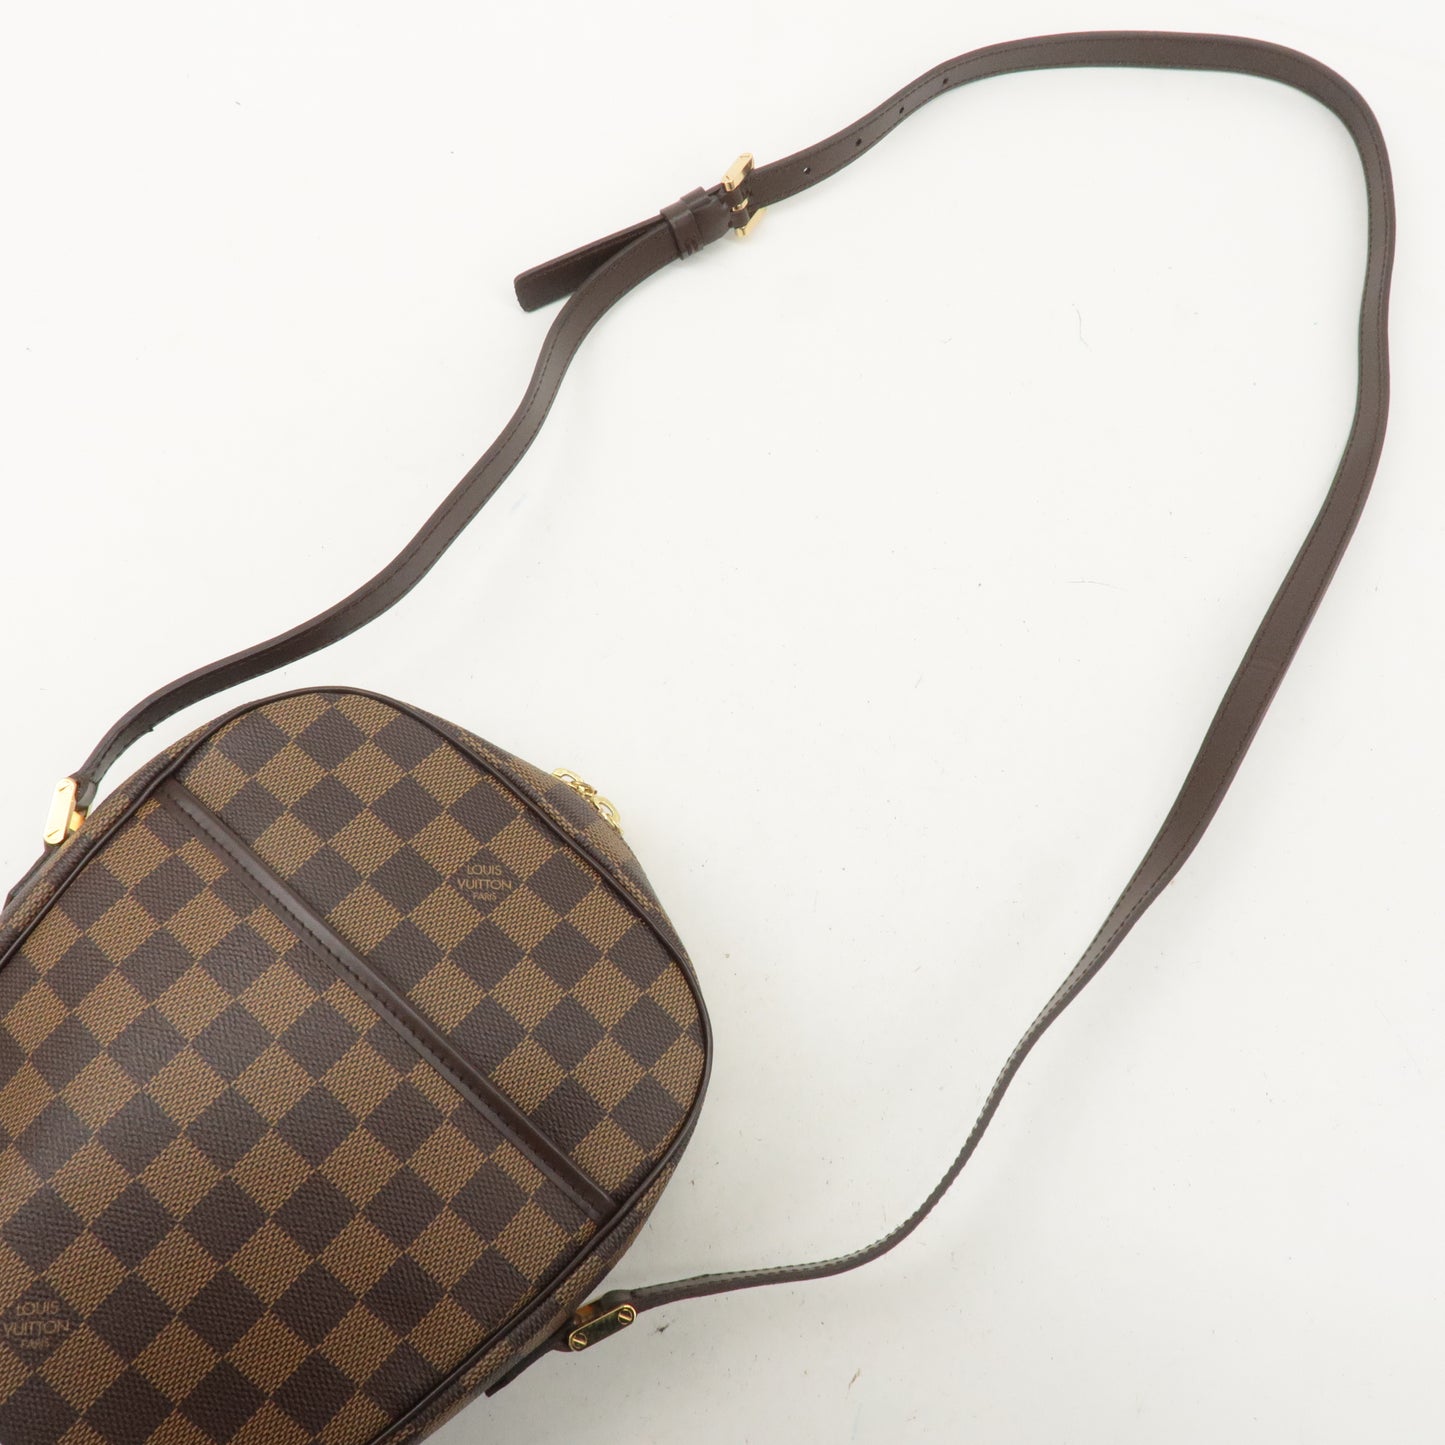 Louis Vuitton Damier Ipanema PM Shoulder Bag　 N51294